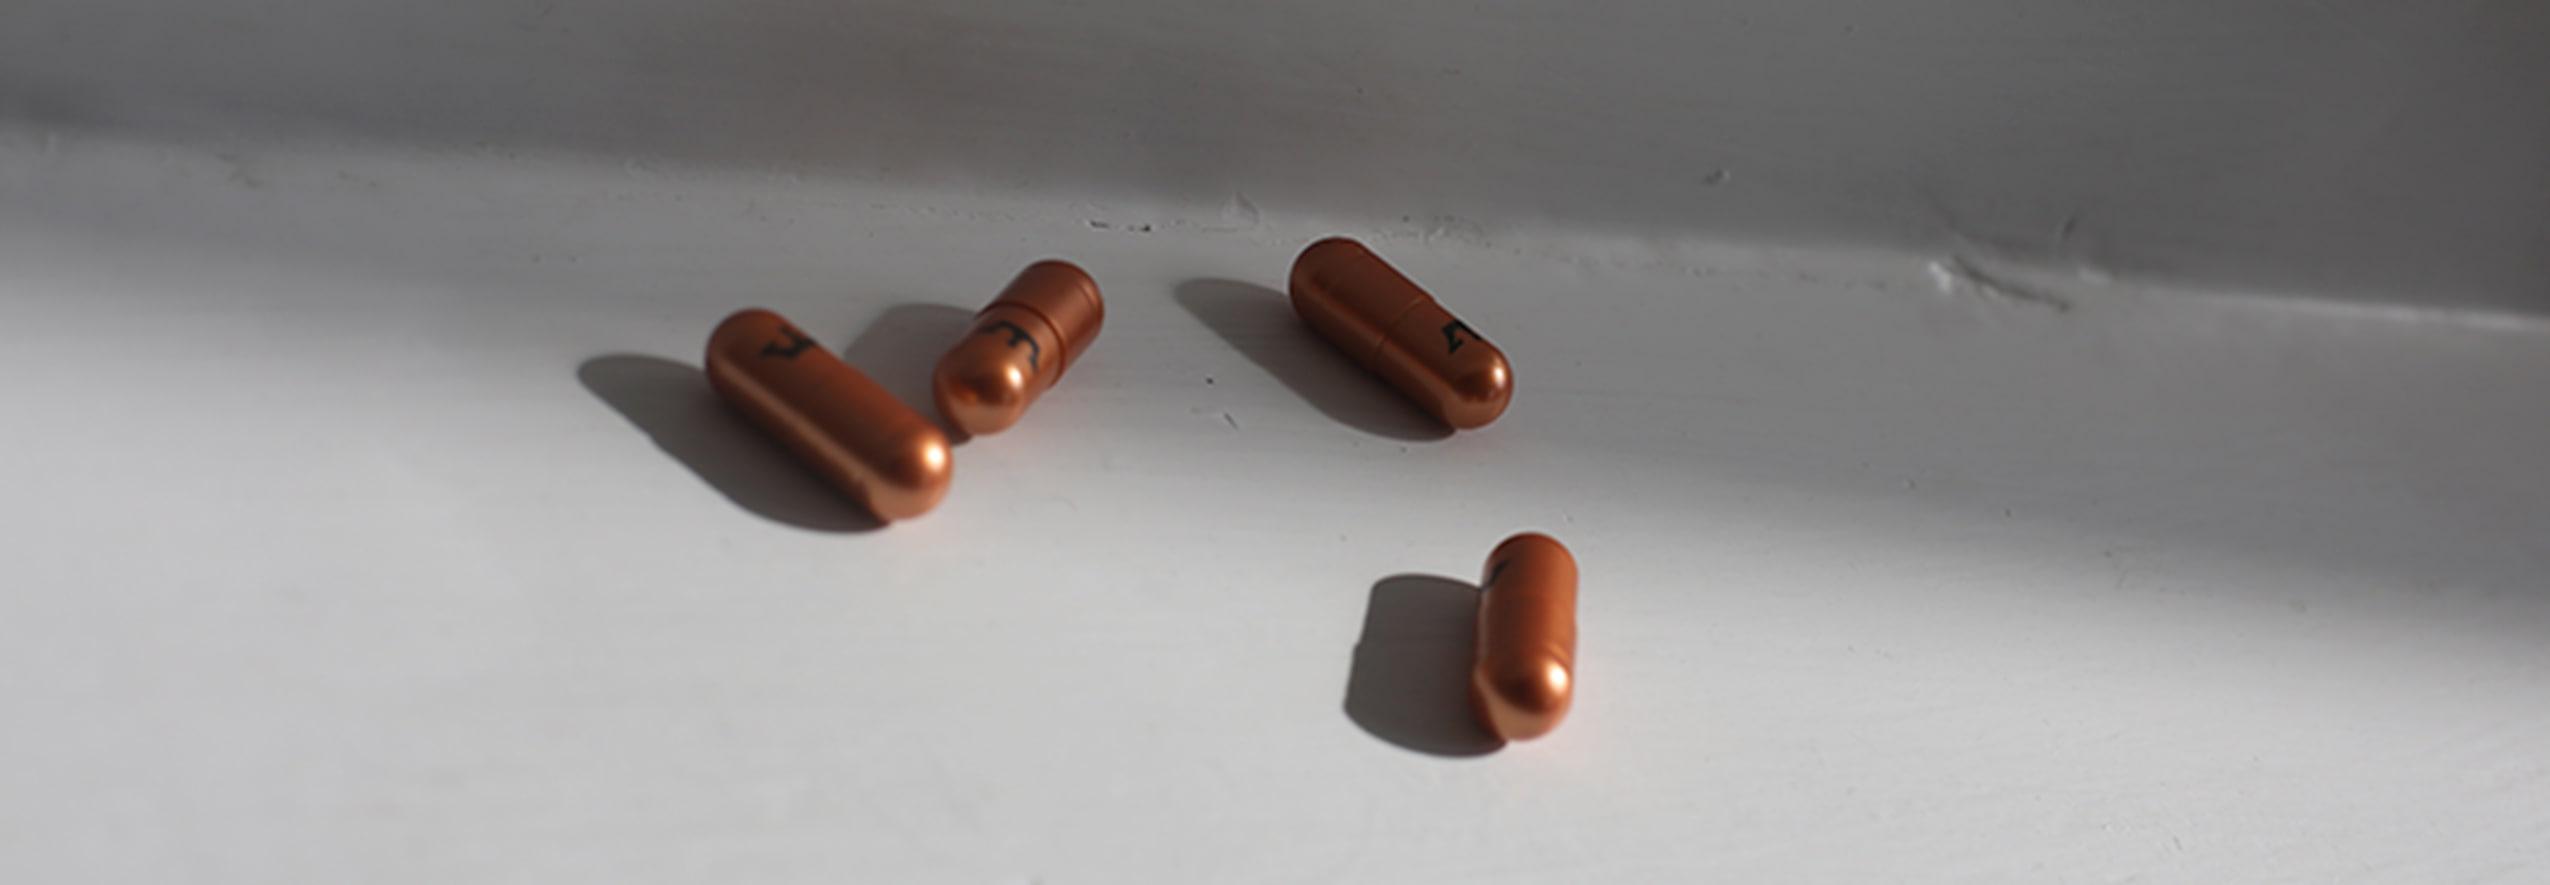 Pills on white table